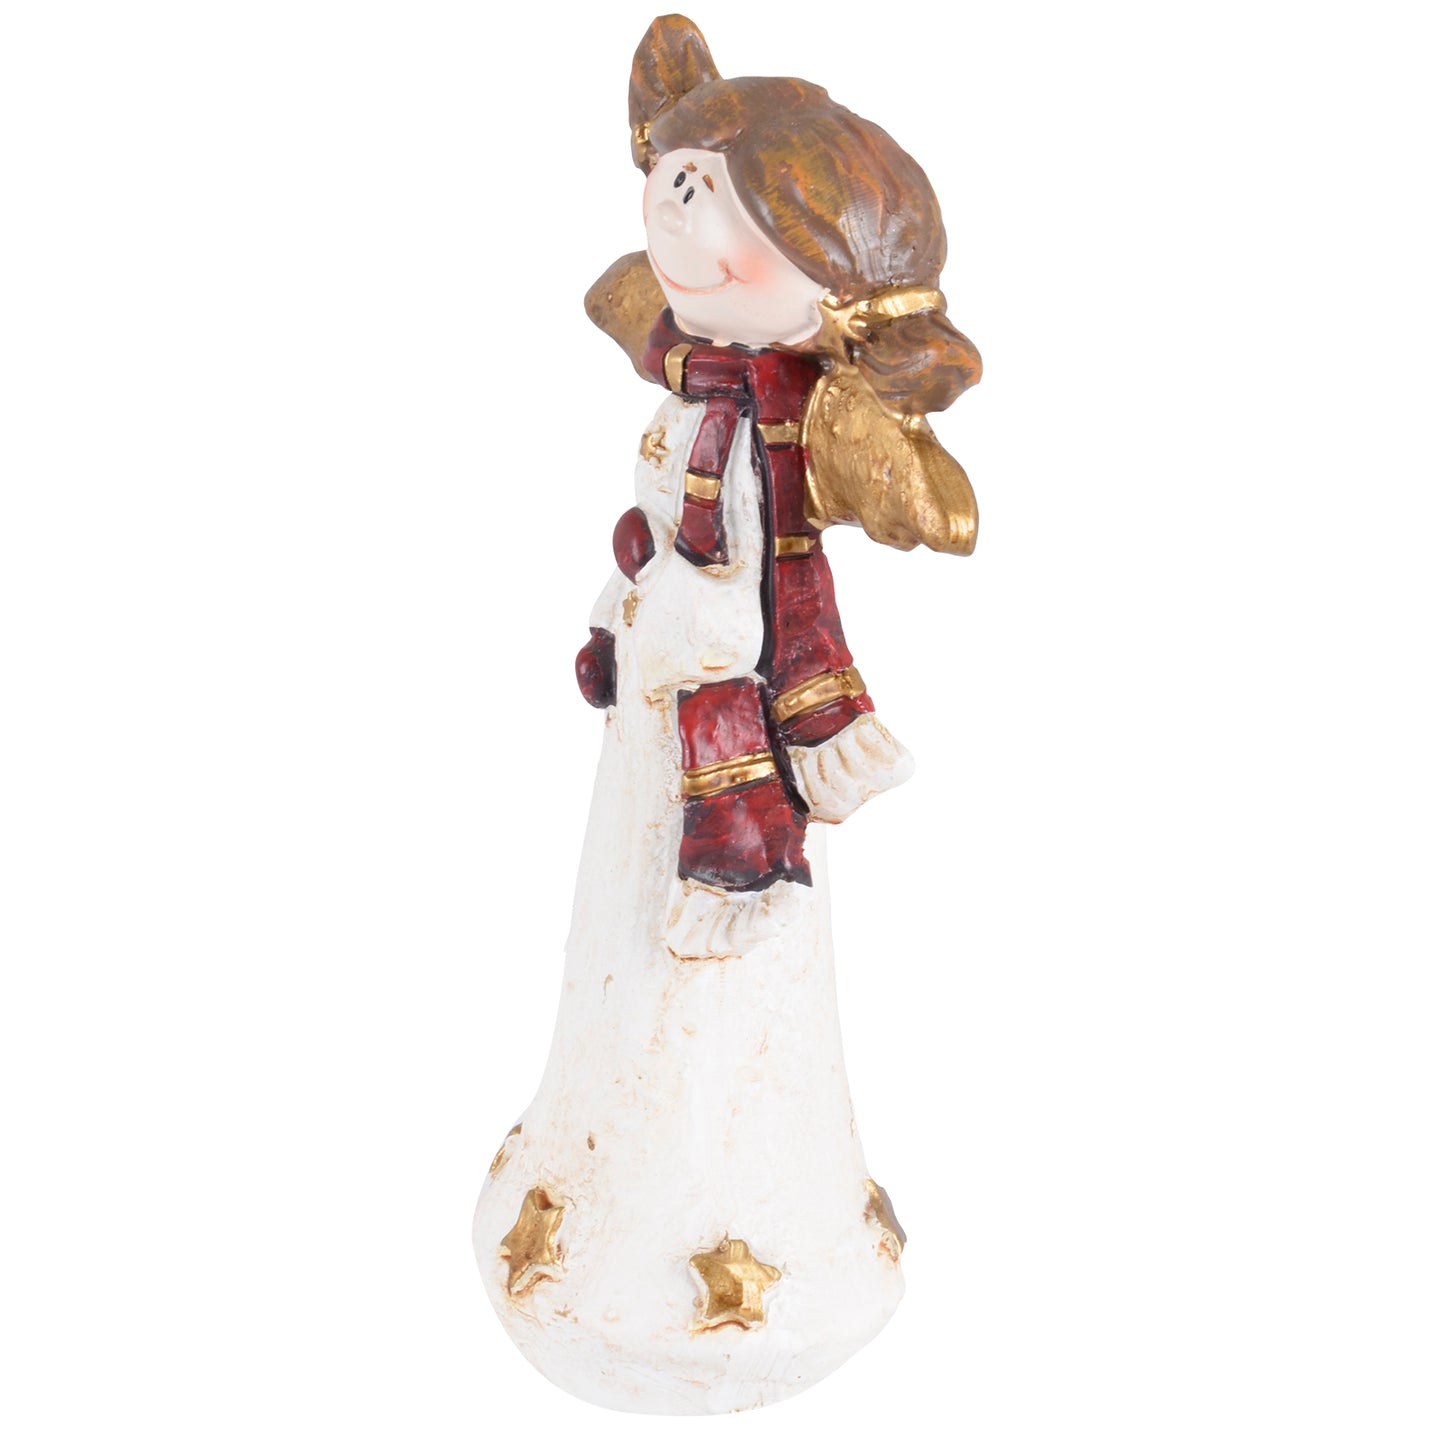 Mr Crimbo Angel Ornament Resin Christmas Decoration - MrCrimbo.co.uk -XS4309 - 13cm -angel figurine